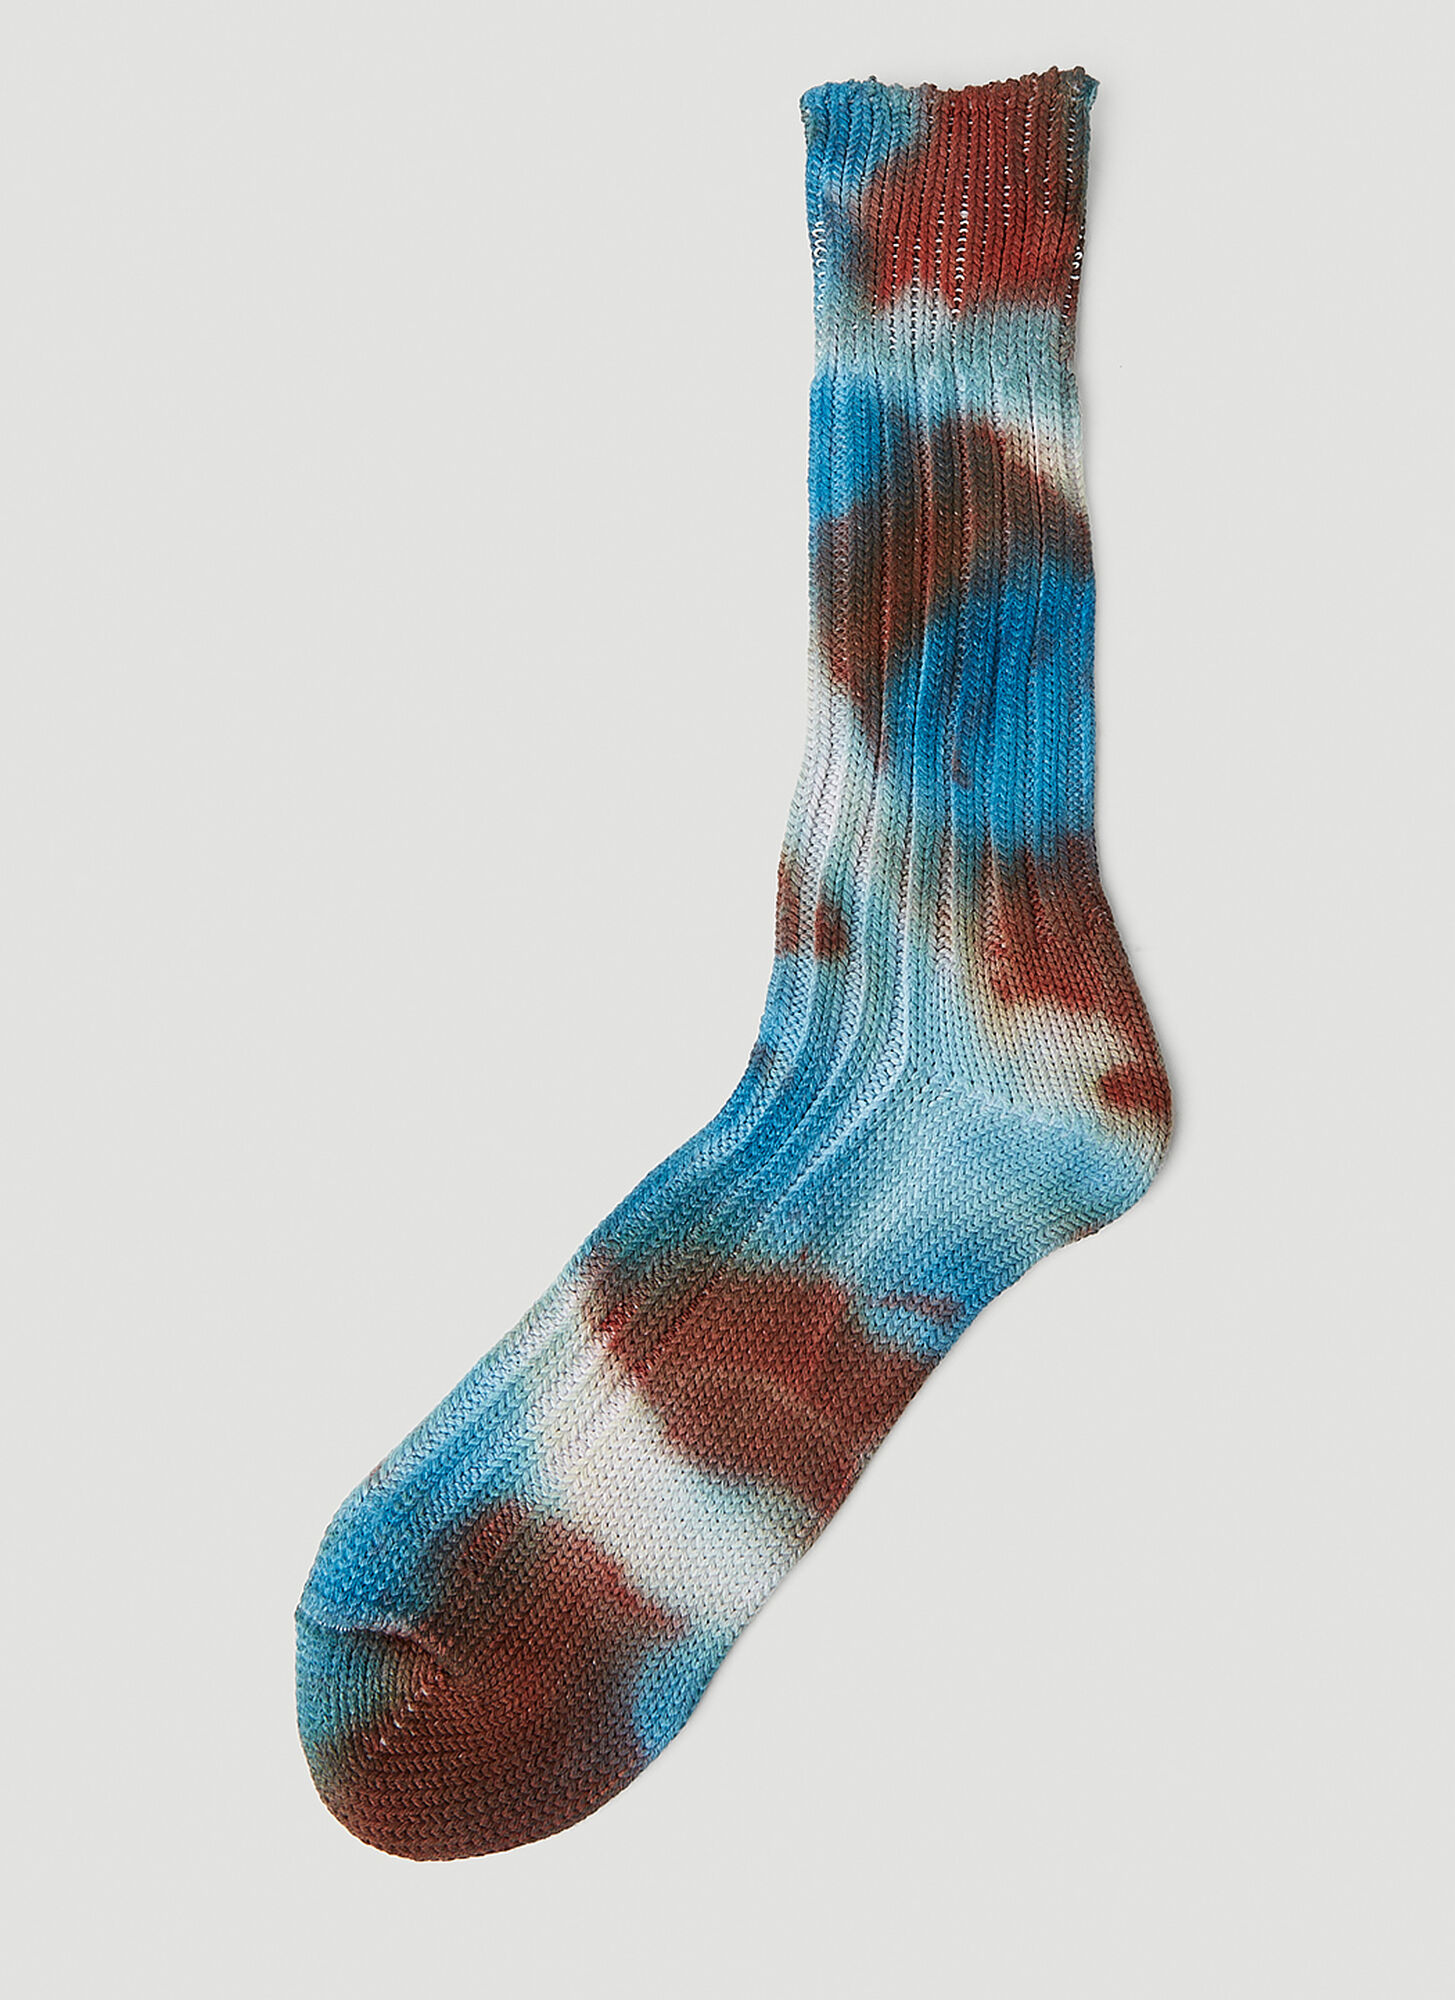 Stain Shade X Decka Socks Tie Dye Socks Unisex Blue